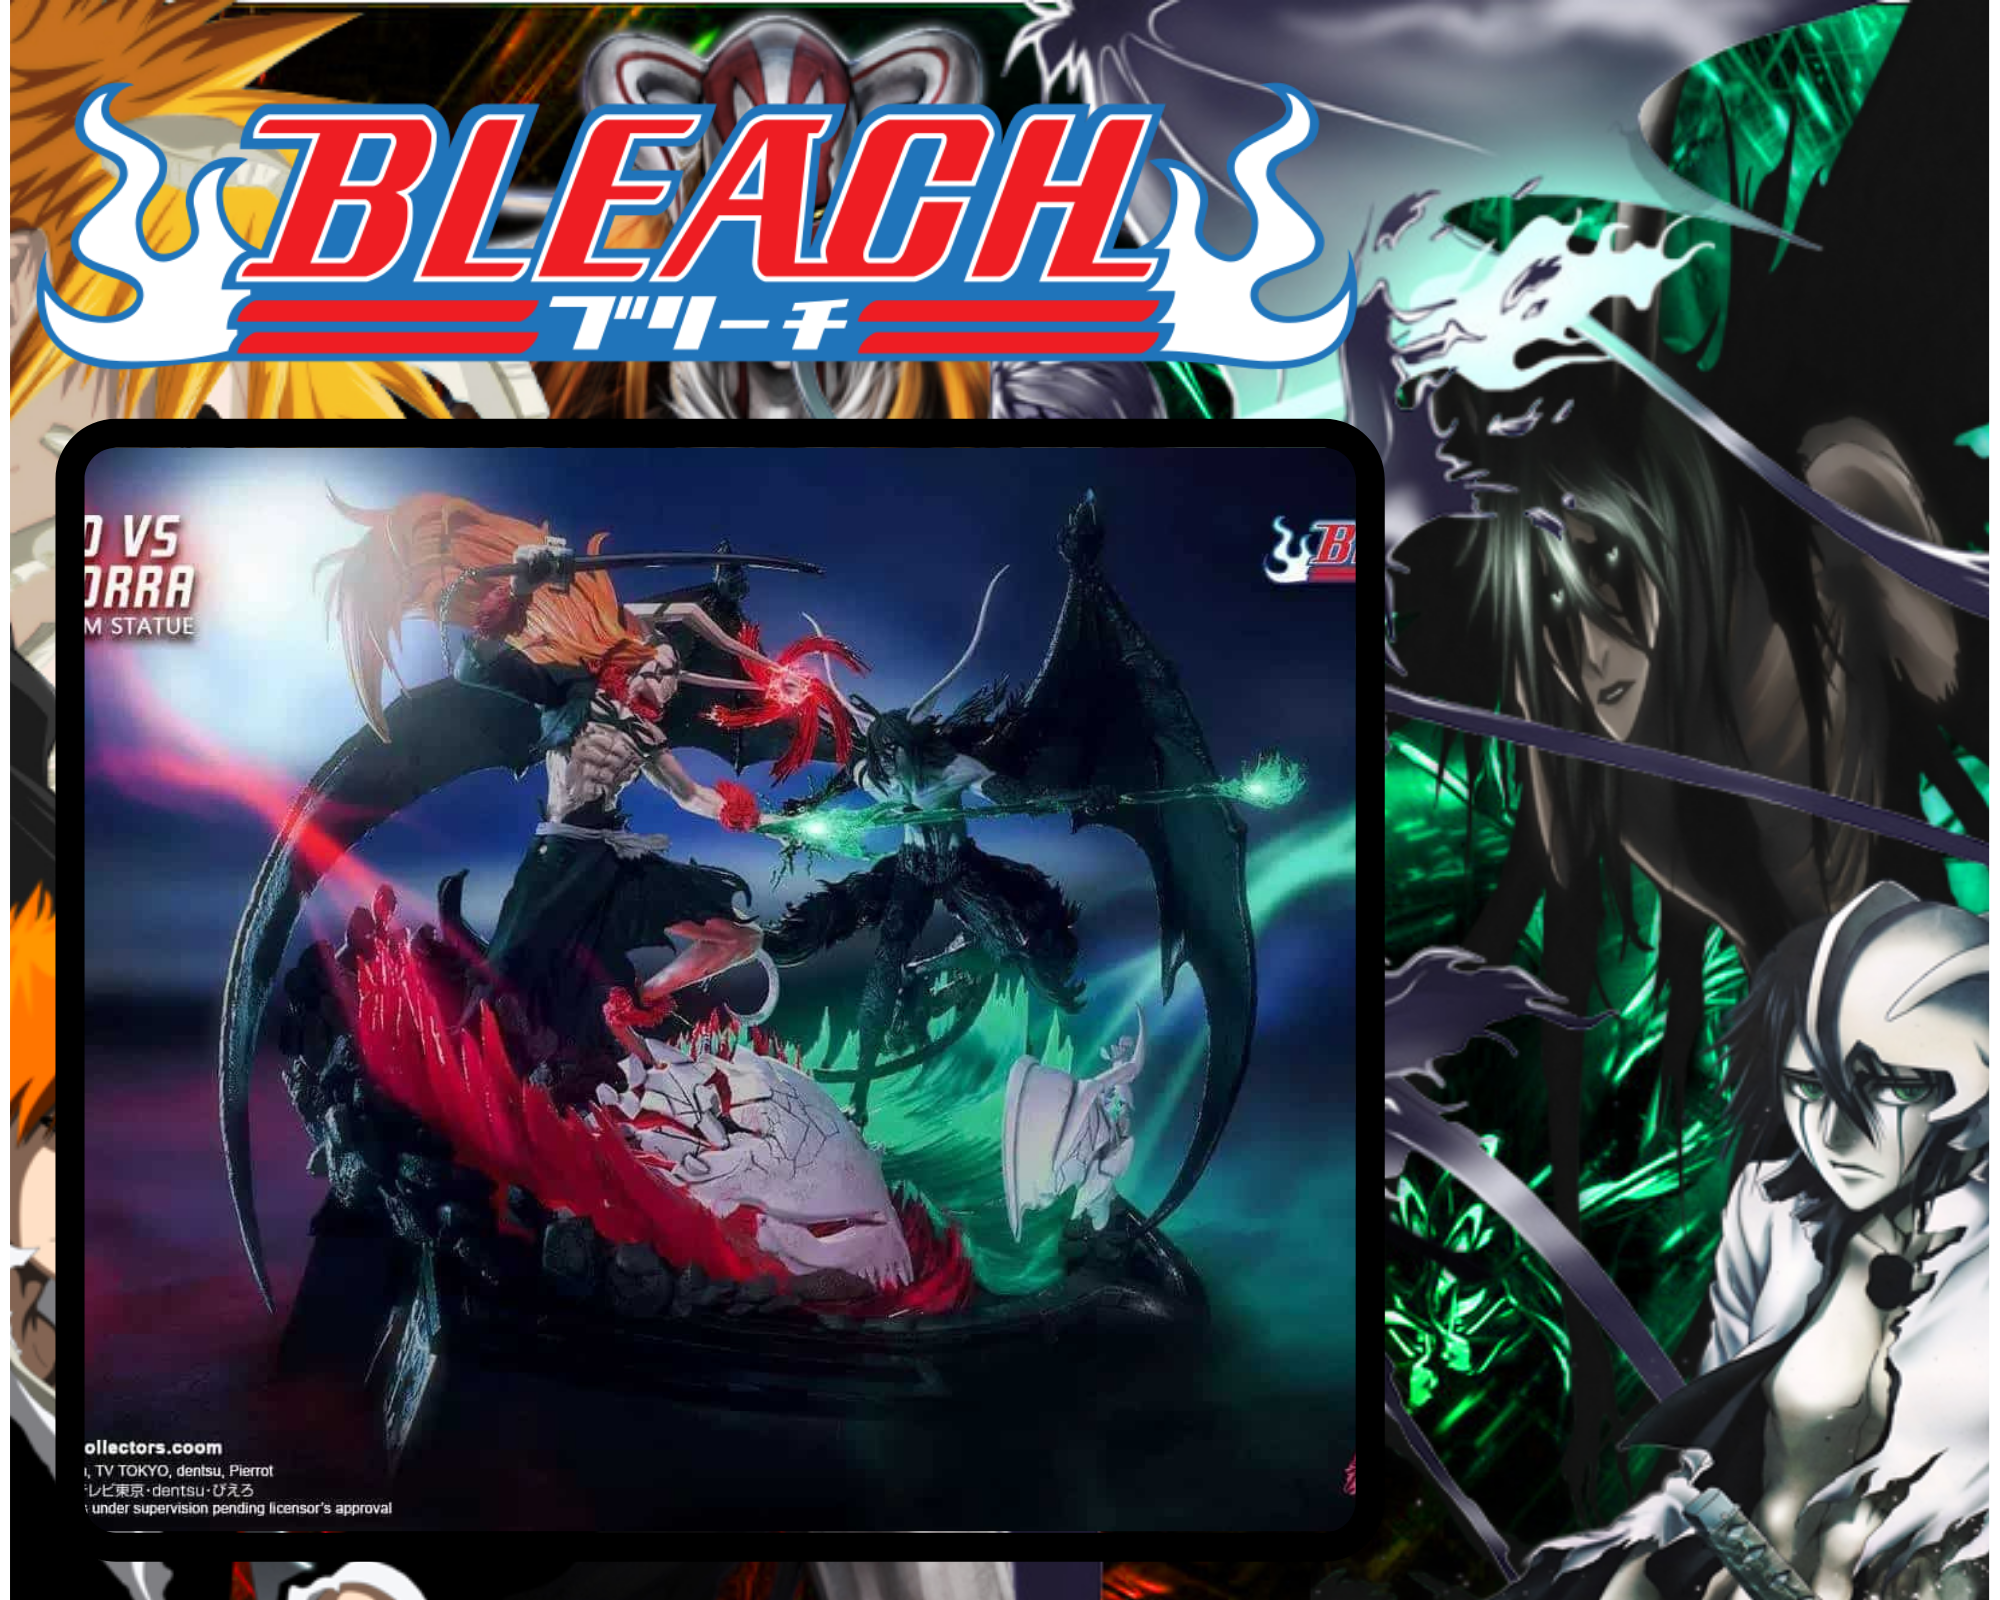 Vasto Lorde Ichigo Vs Ulquiorra In The Last Bleach Console Game 